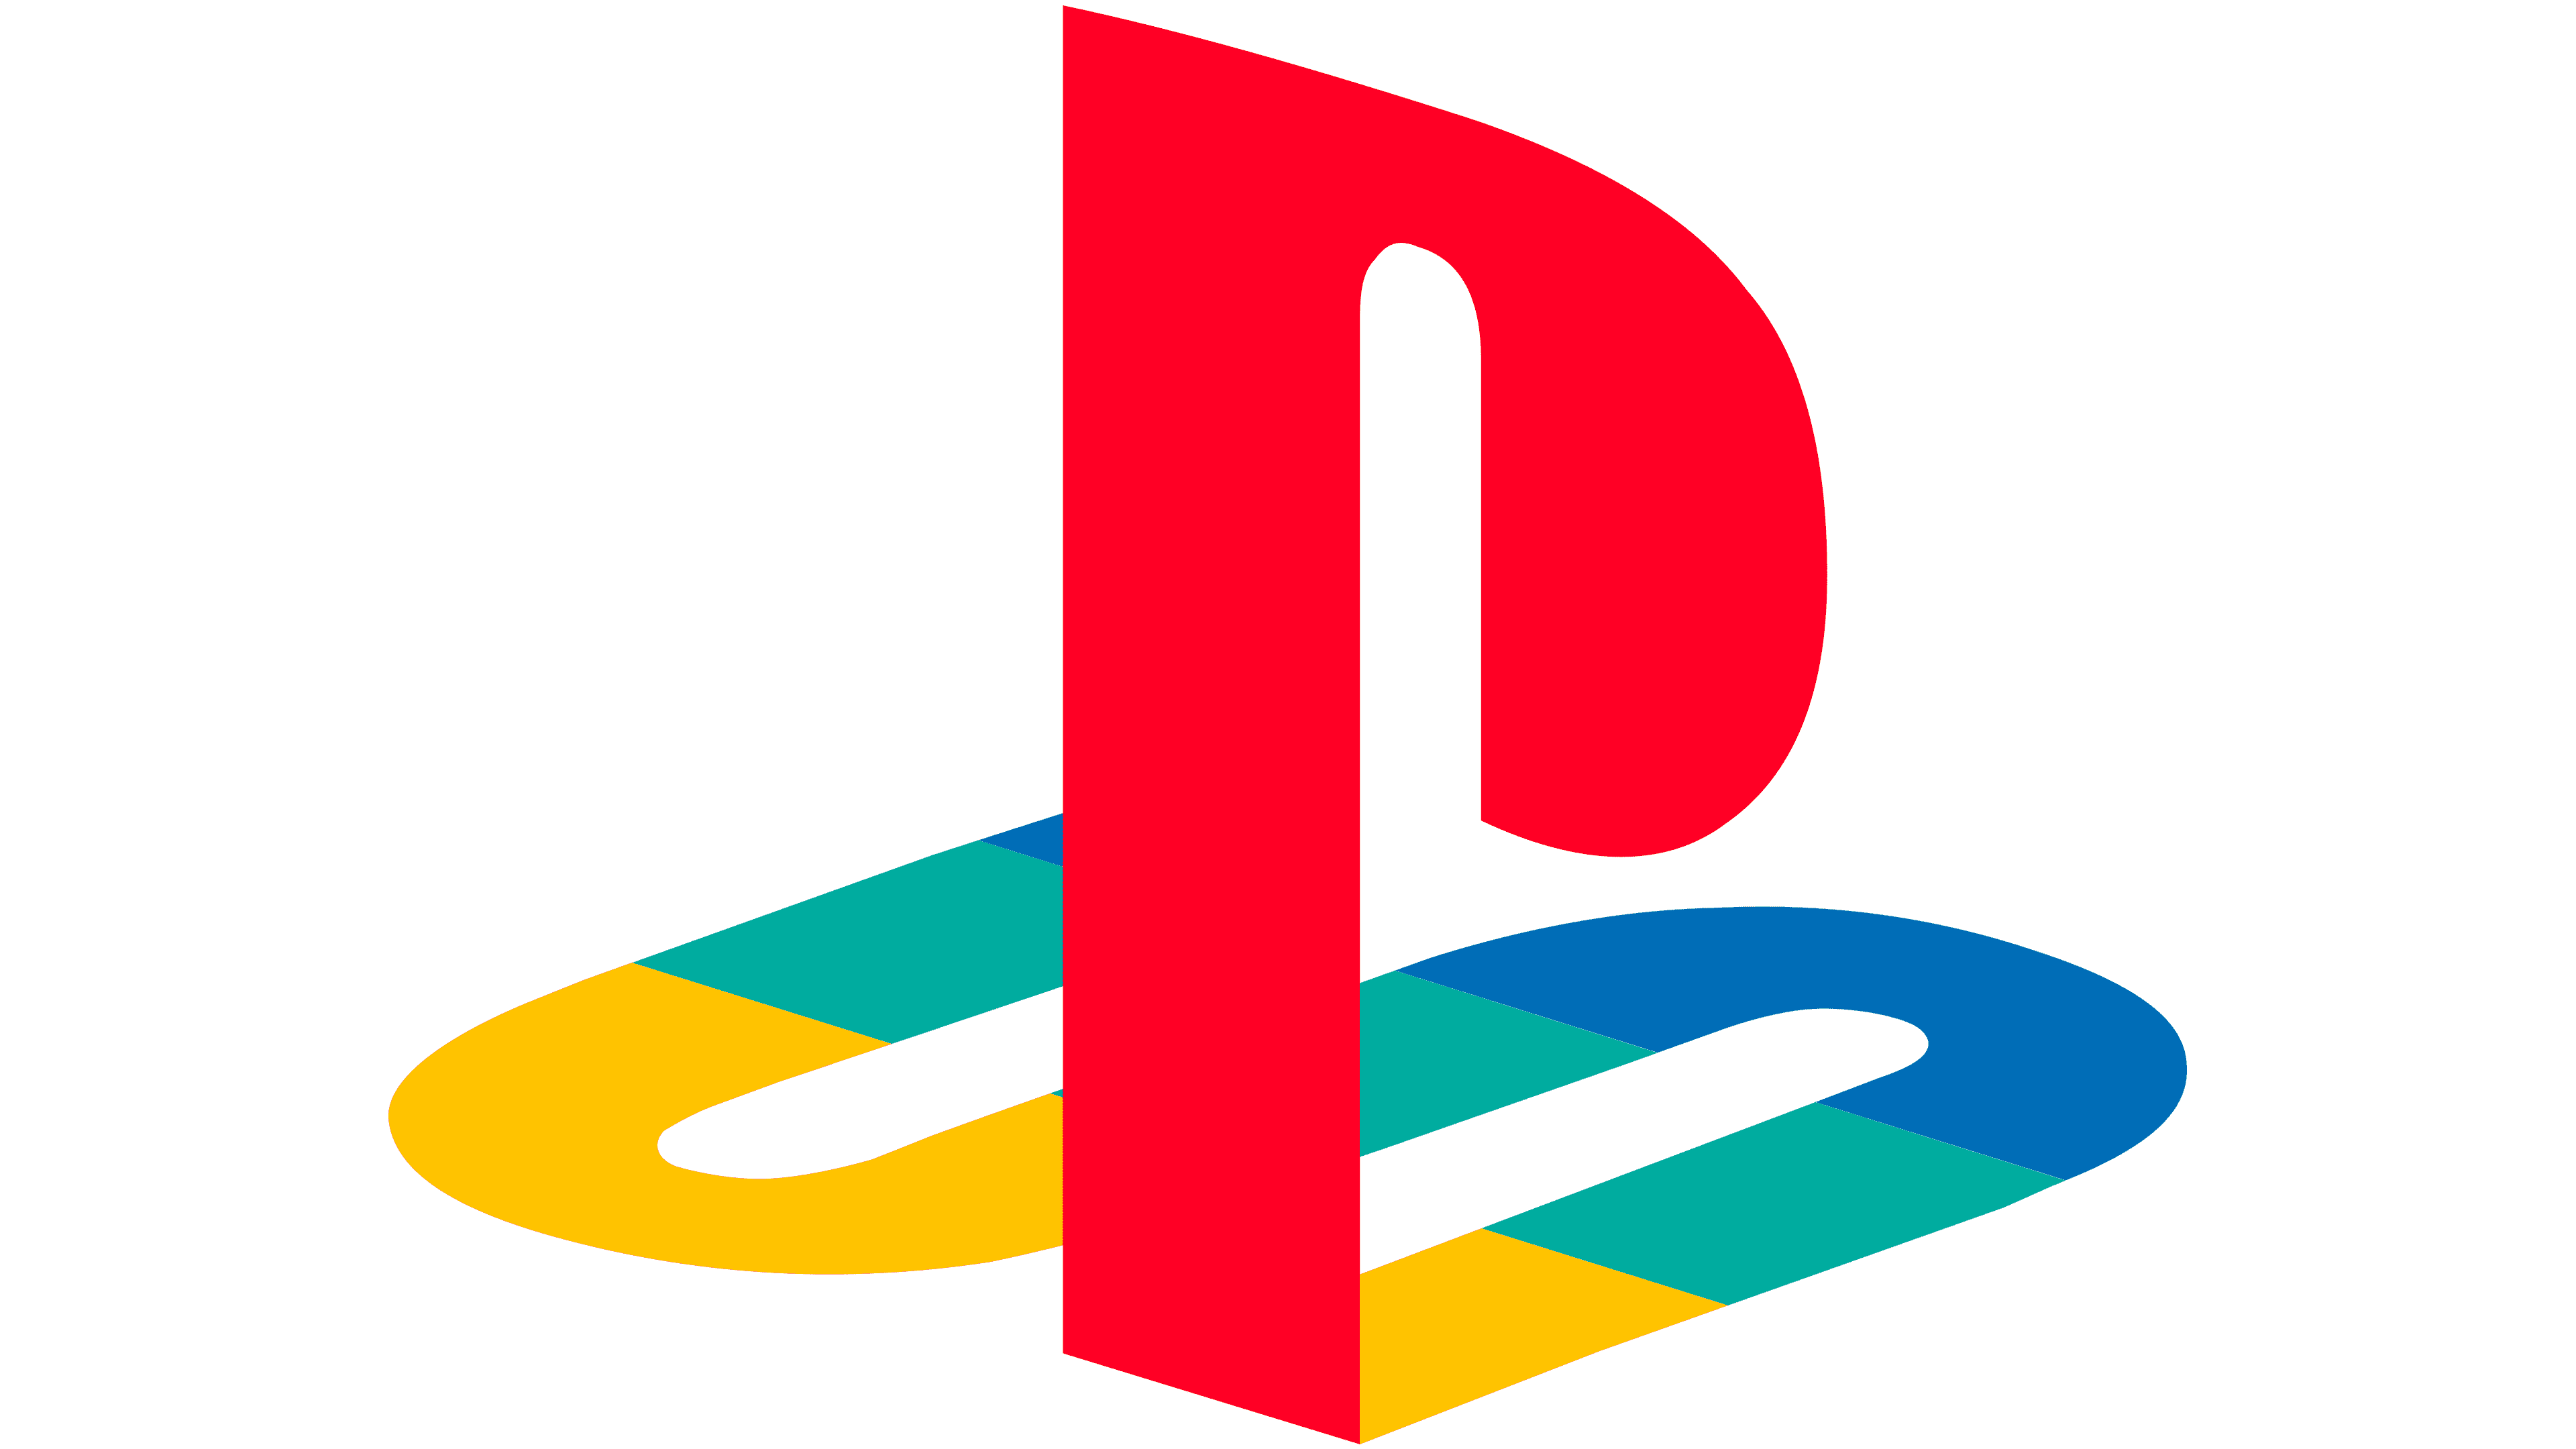 PlayStation Logo History: An Emblem Of Gaming Culture